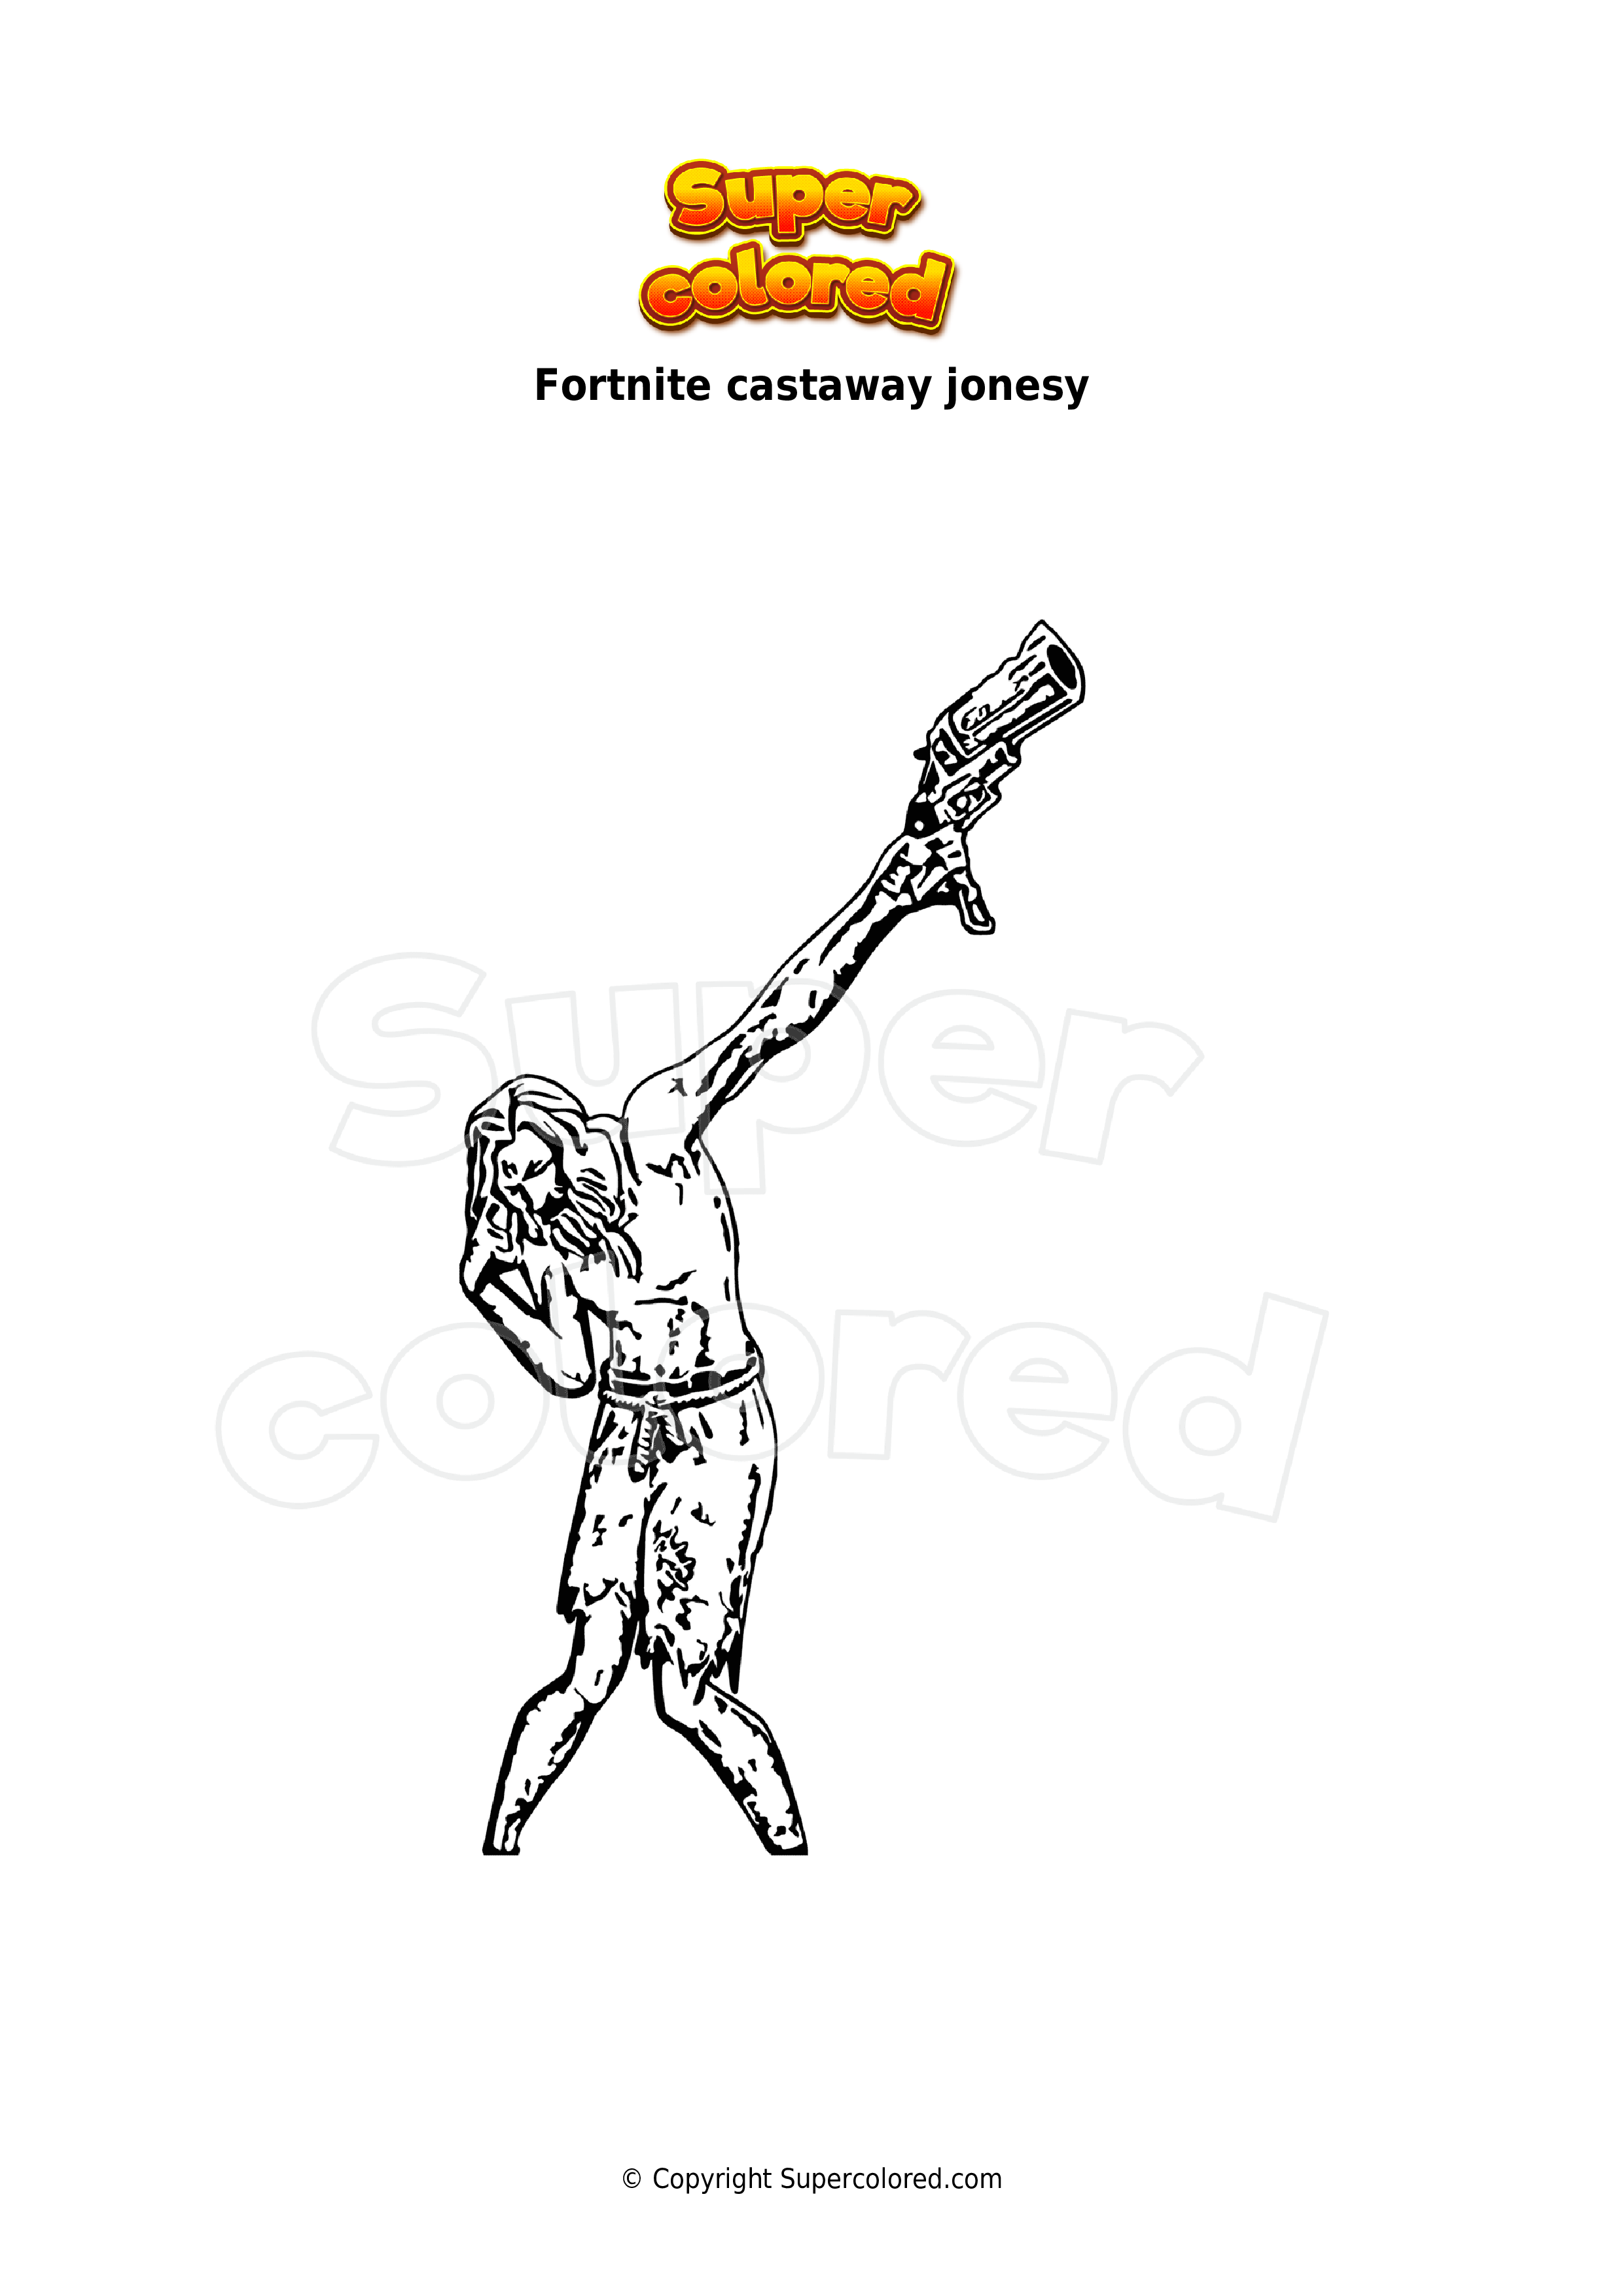 Castaway Jonesy Fortnite Wallpapers